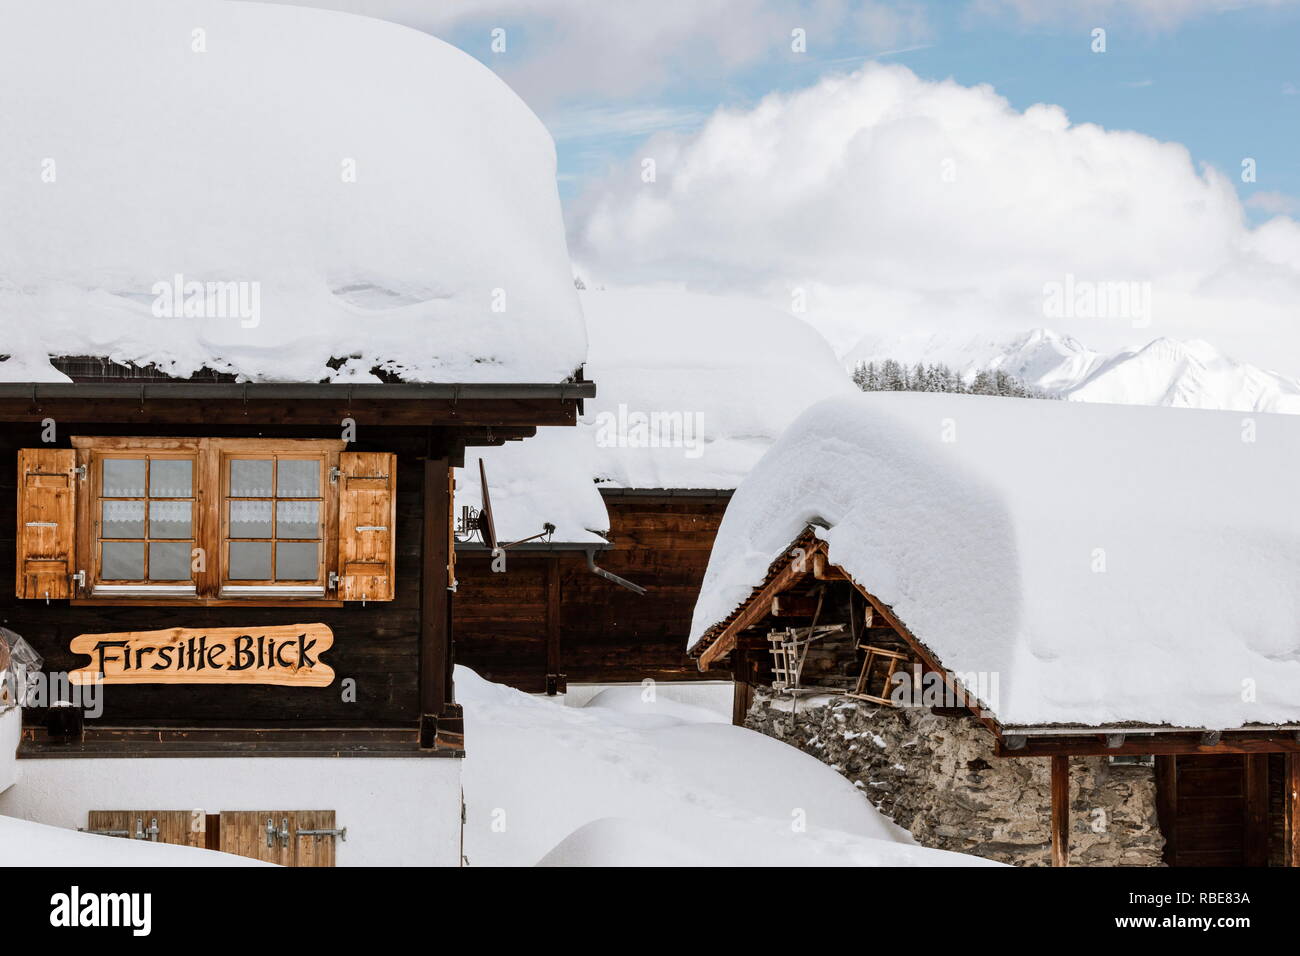 Typical mountain huts submerged by fresh snow Bettmeralp district of Raron canton of Valais Switzerland Europe Stock Photo